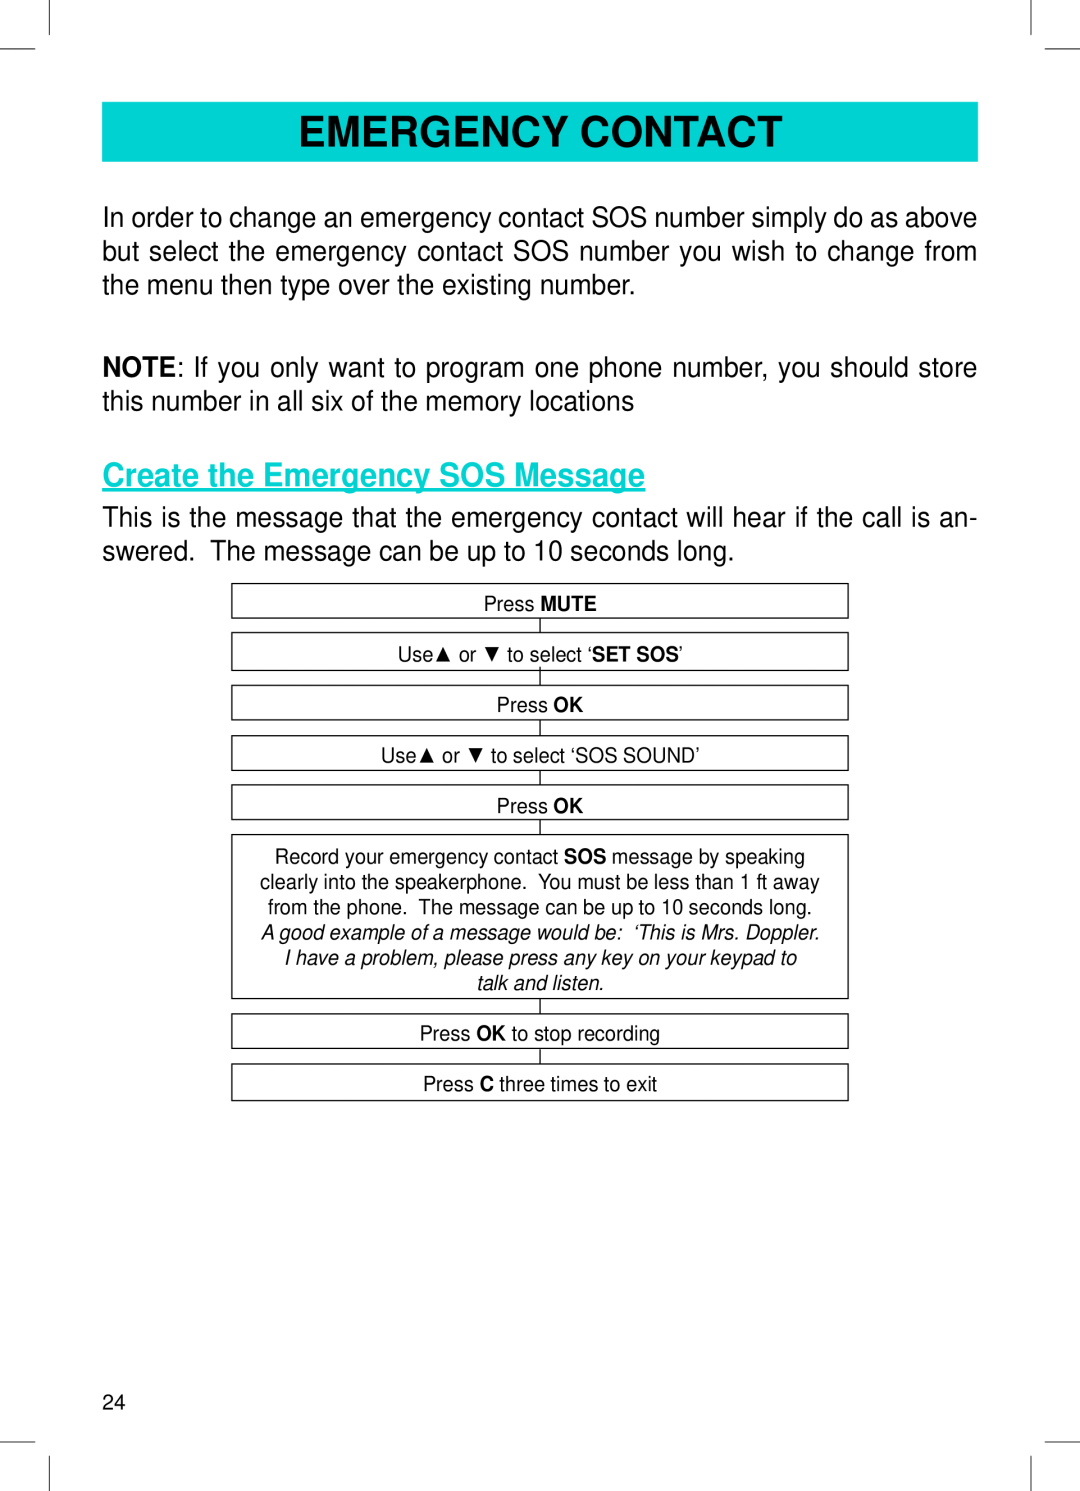 Geemarc AMPLI600 manual Create the Emergency SOS Message, Emergency Contact 